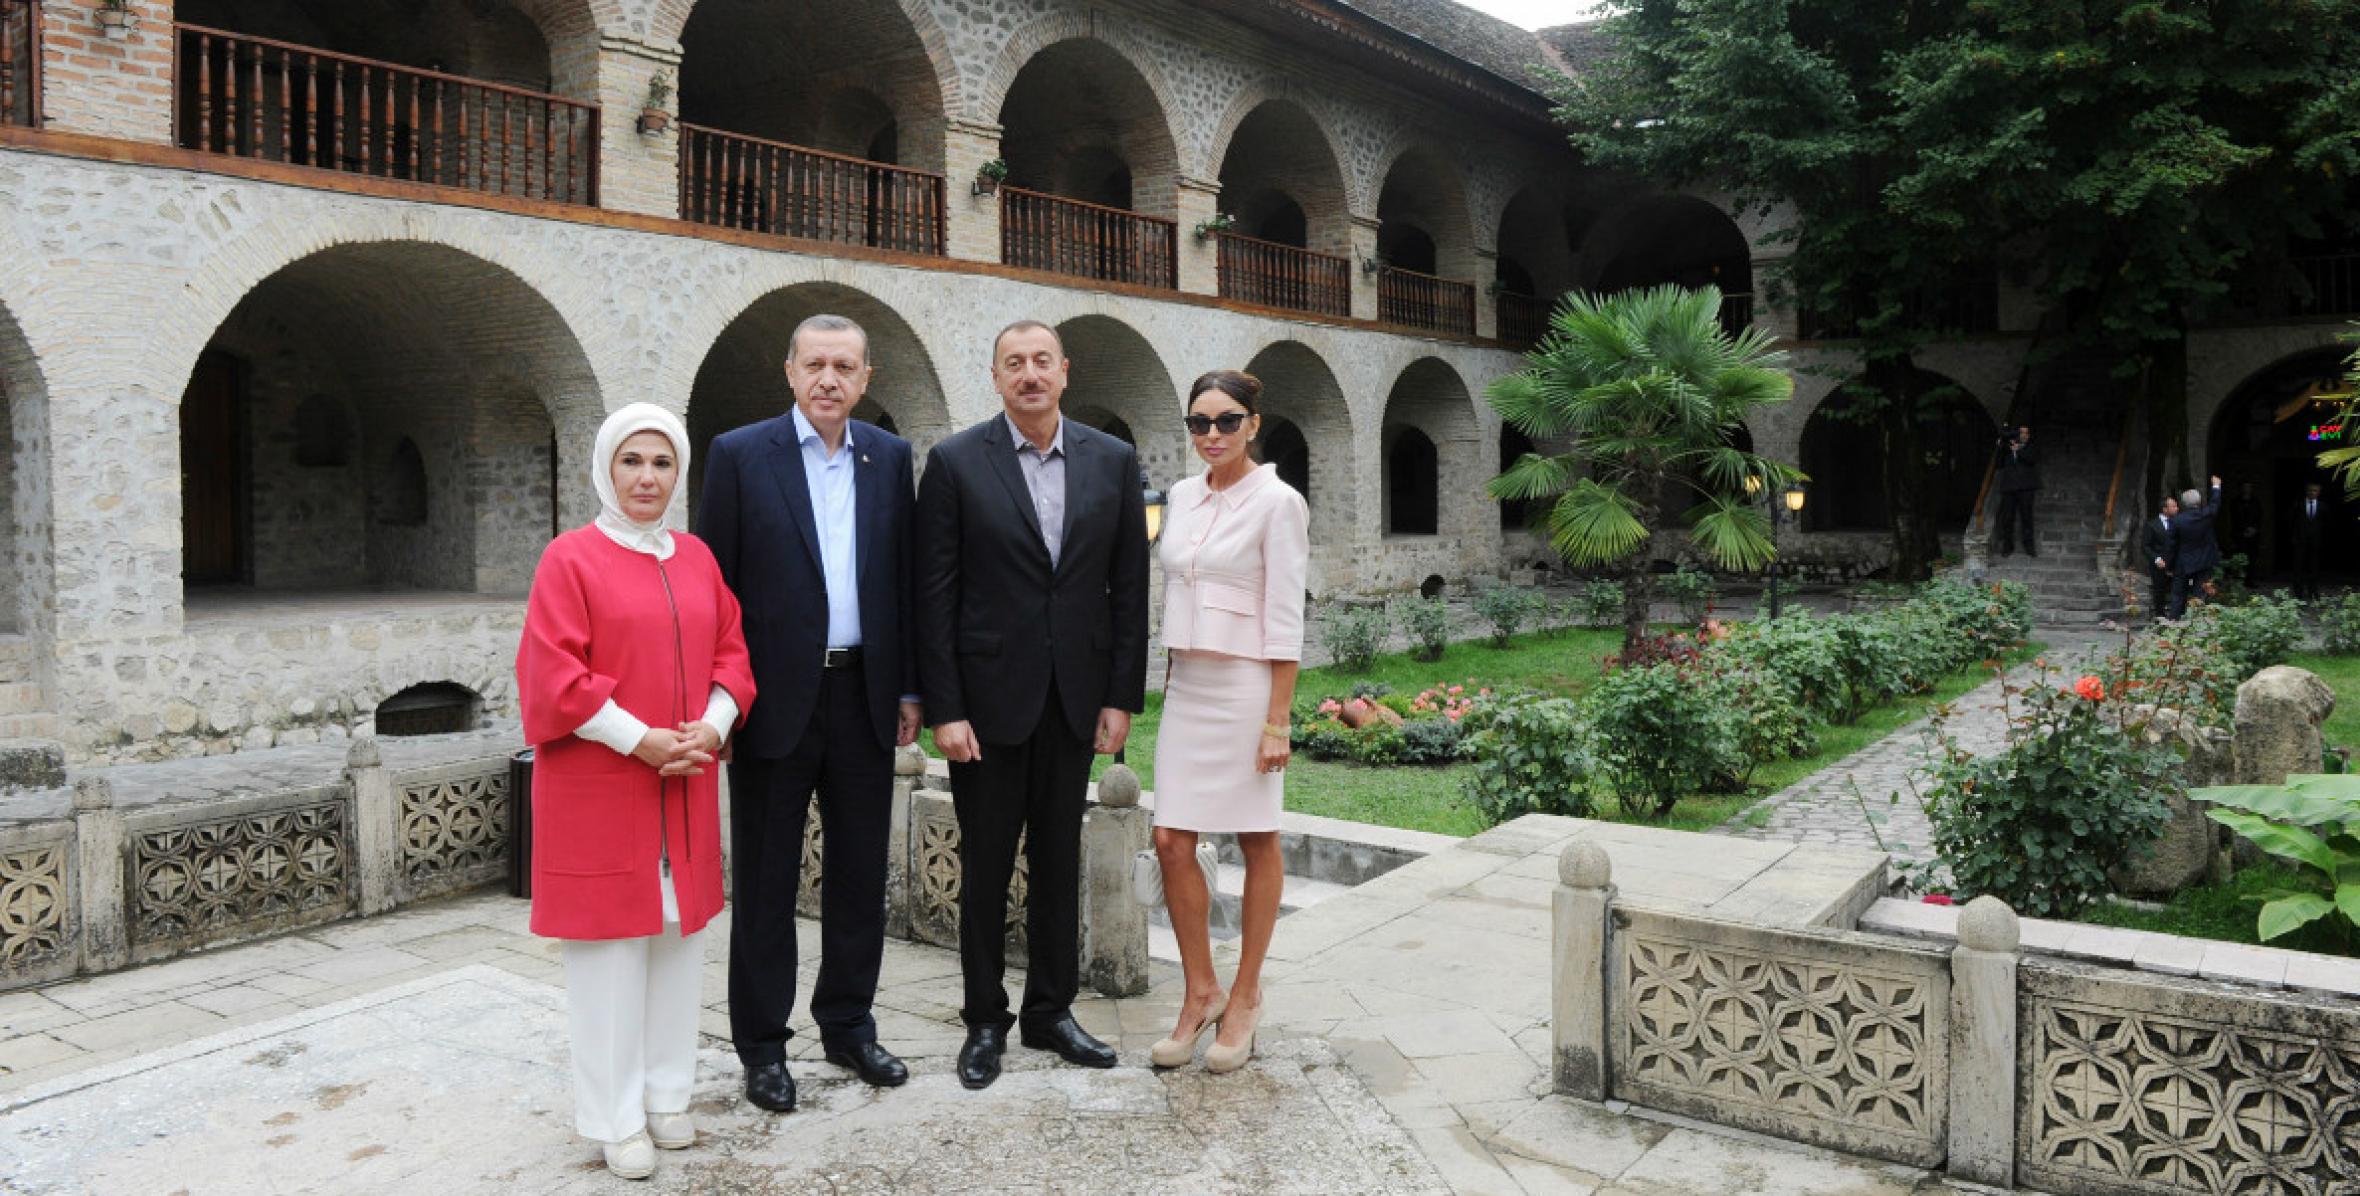 Ilham Aliyev and Prime Minister Recep Tayyip Erdogan visited Yukhari Karvansaray hotel complex